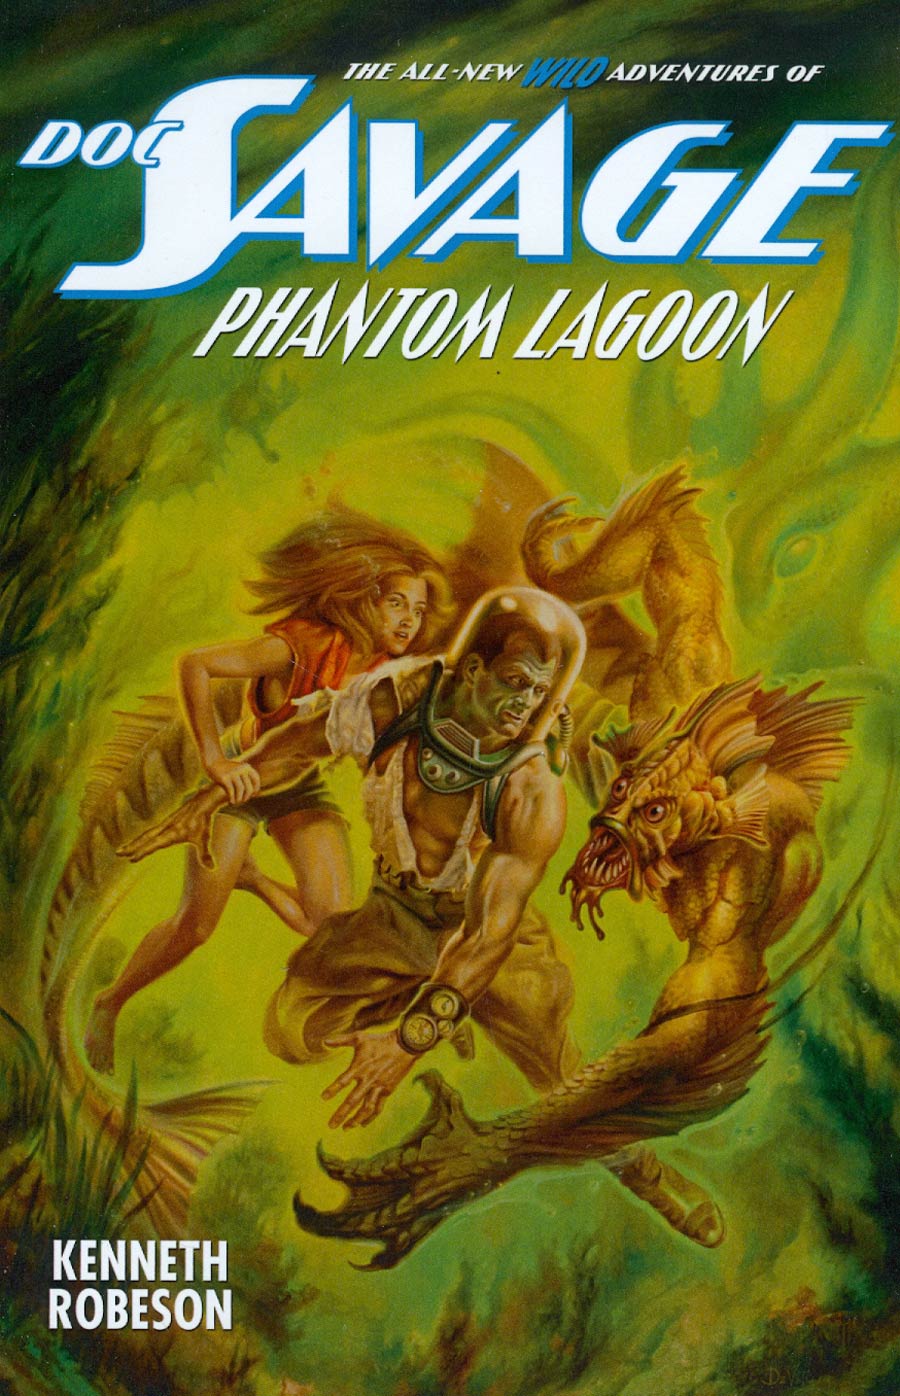 Doc Savage Phantom Lagoon TP